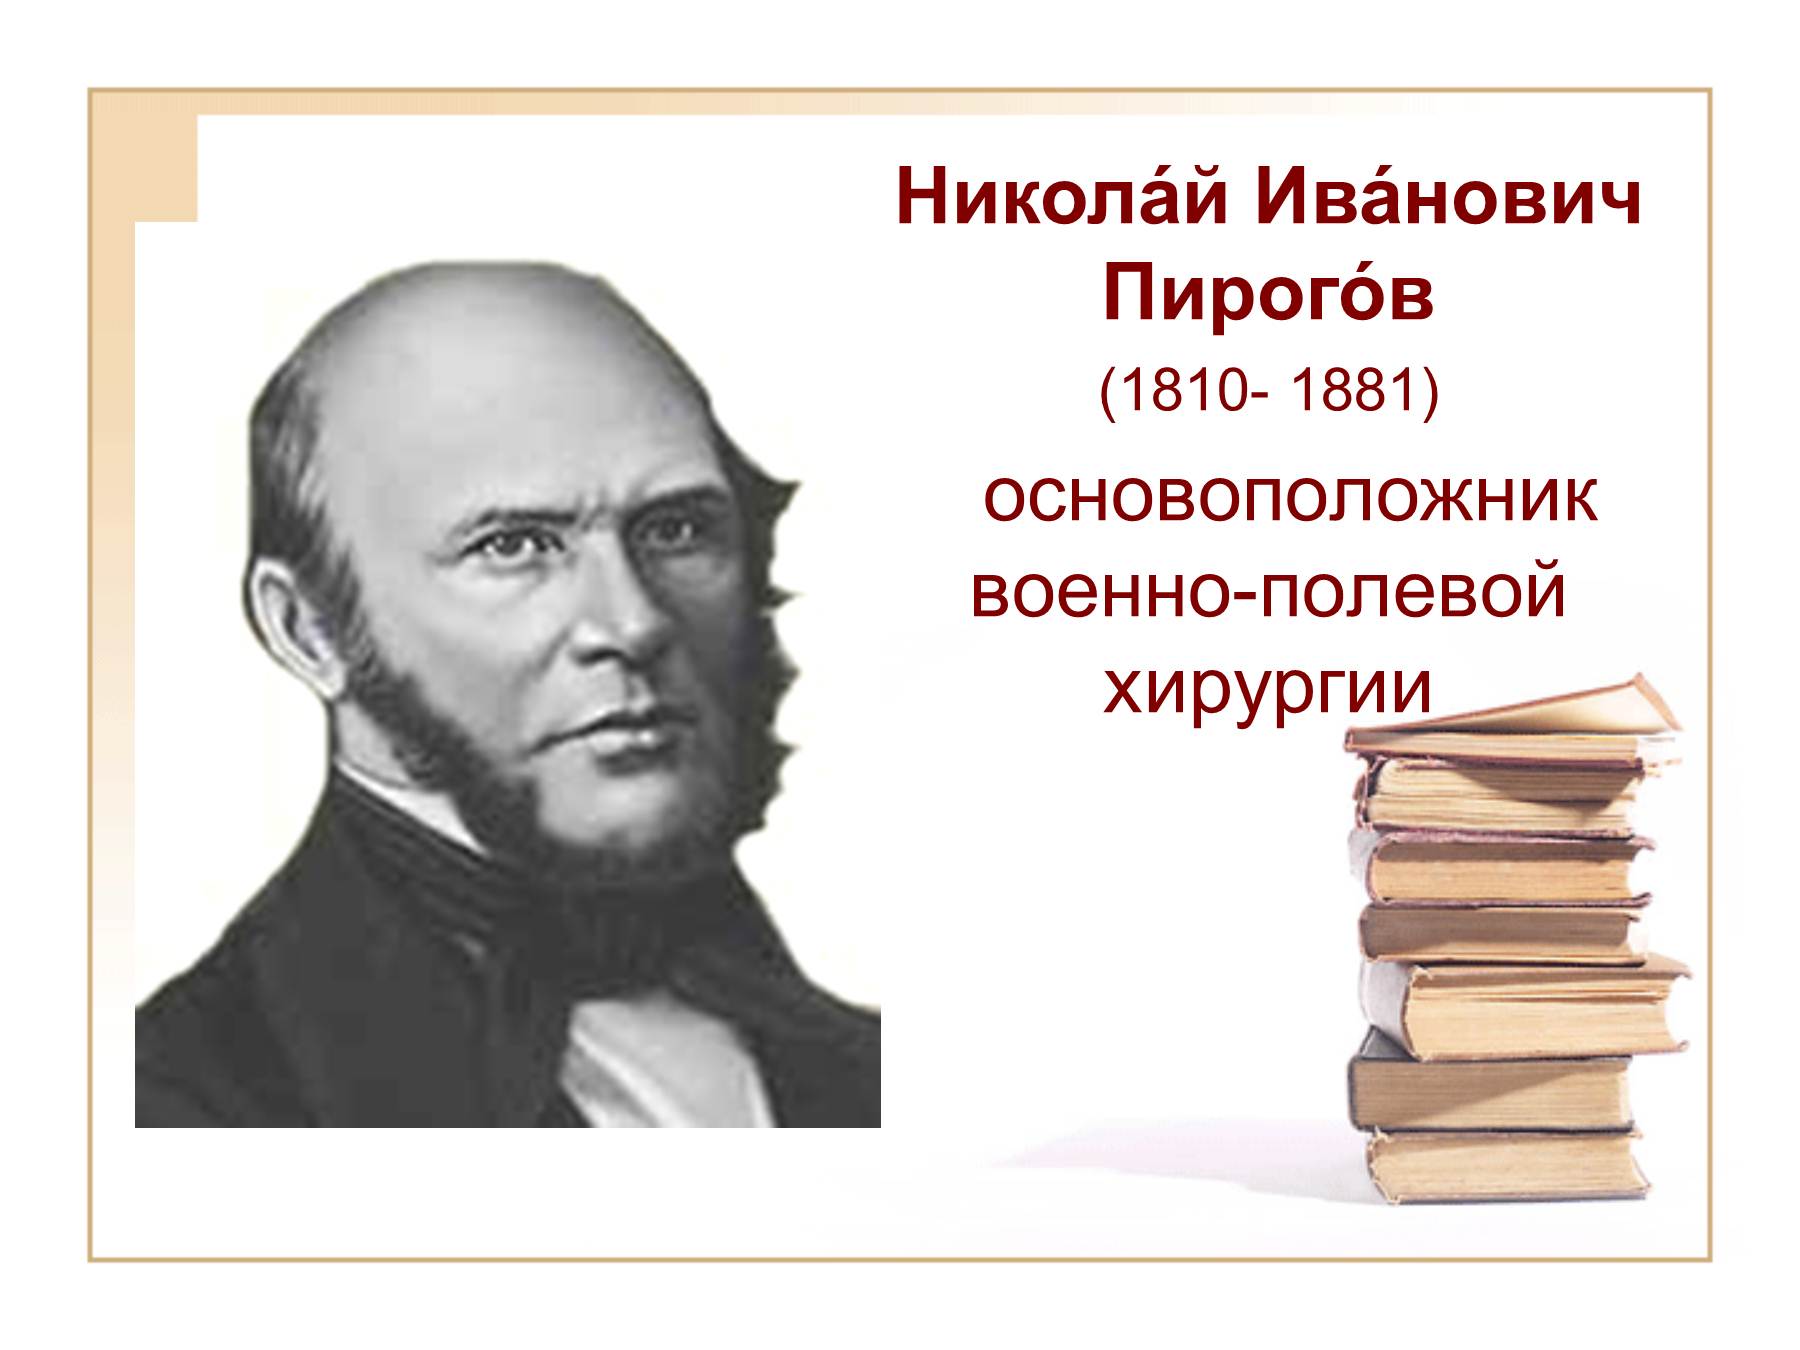 Николай Иванович пирогов вклад в науку